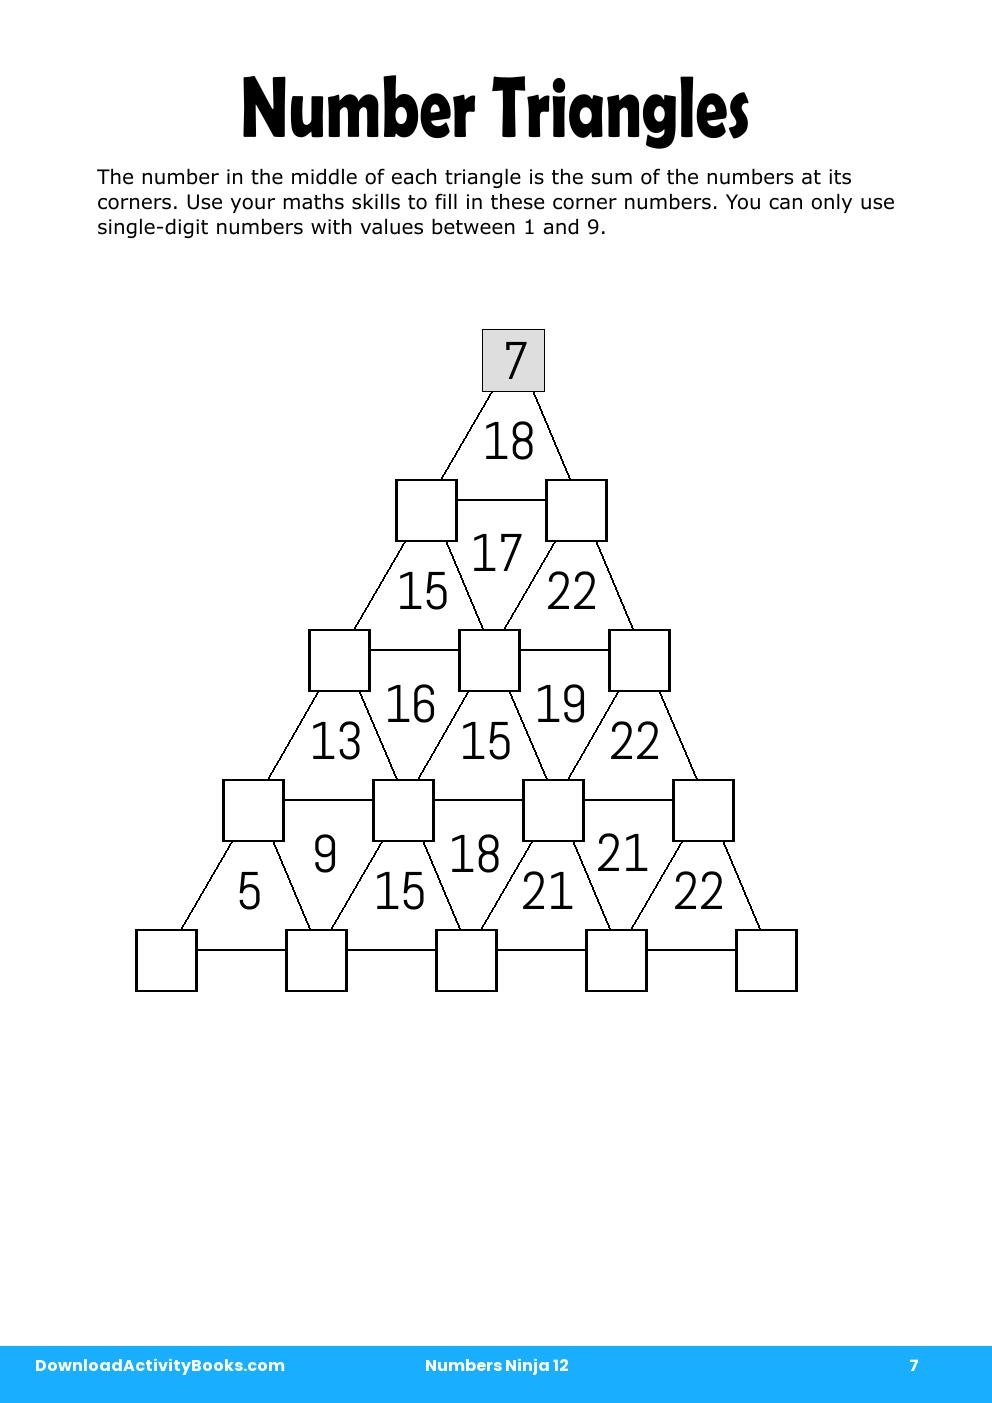 Number Triangles in Numbers Ninja 12